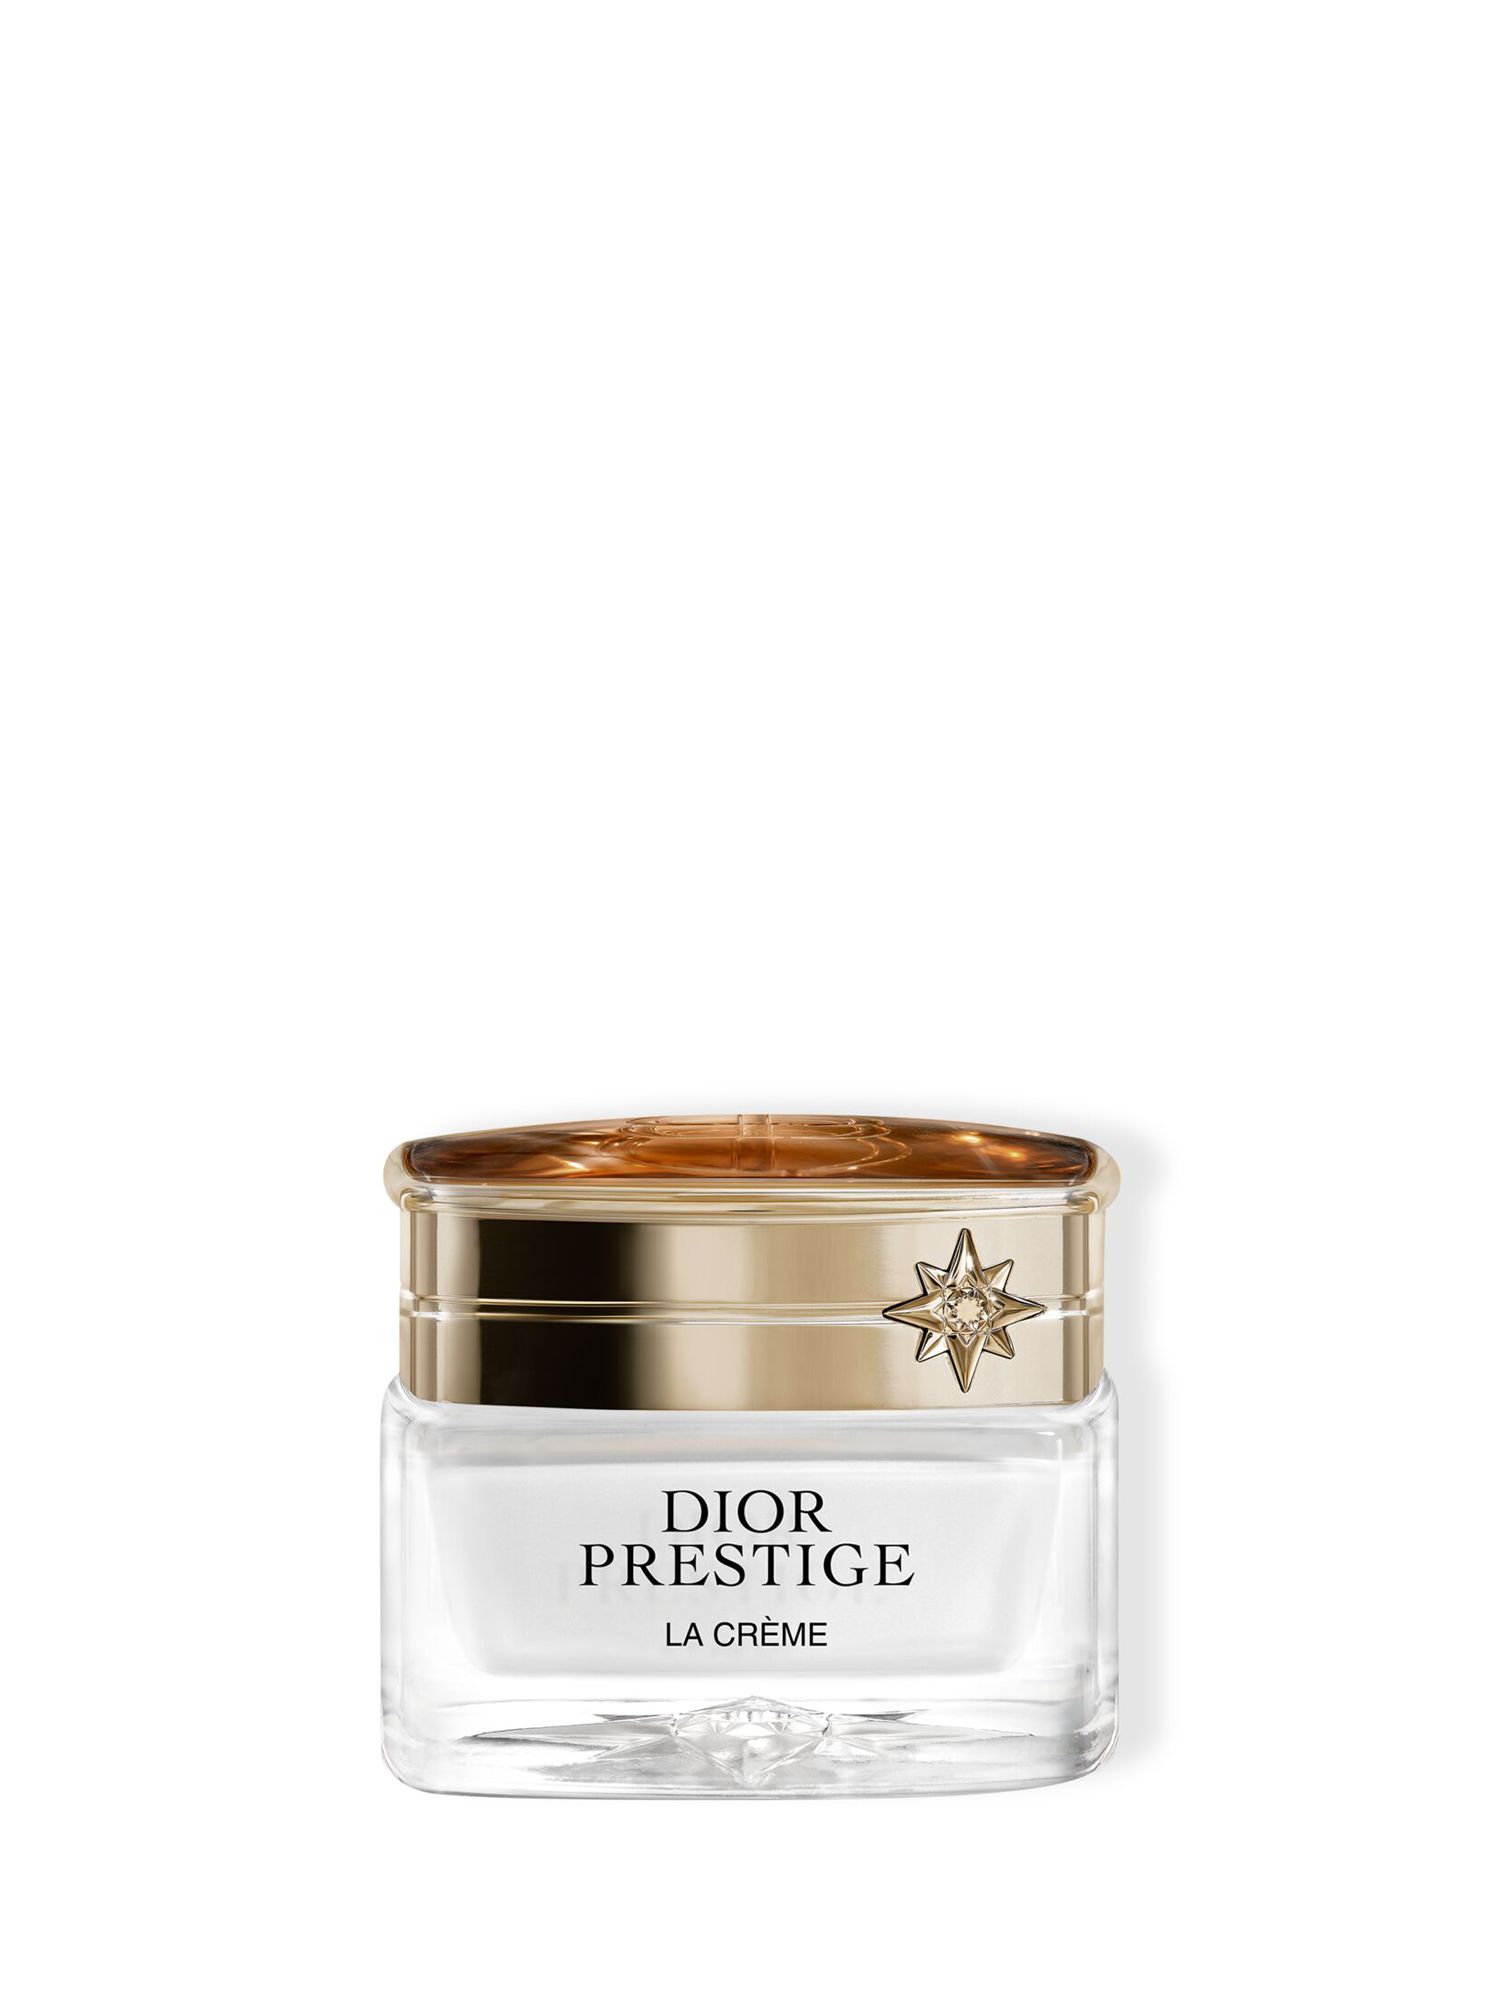 DIOR Prestige La Crème Texture Essentielle Jar, 15ml 1